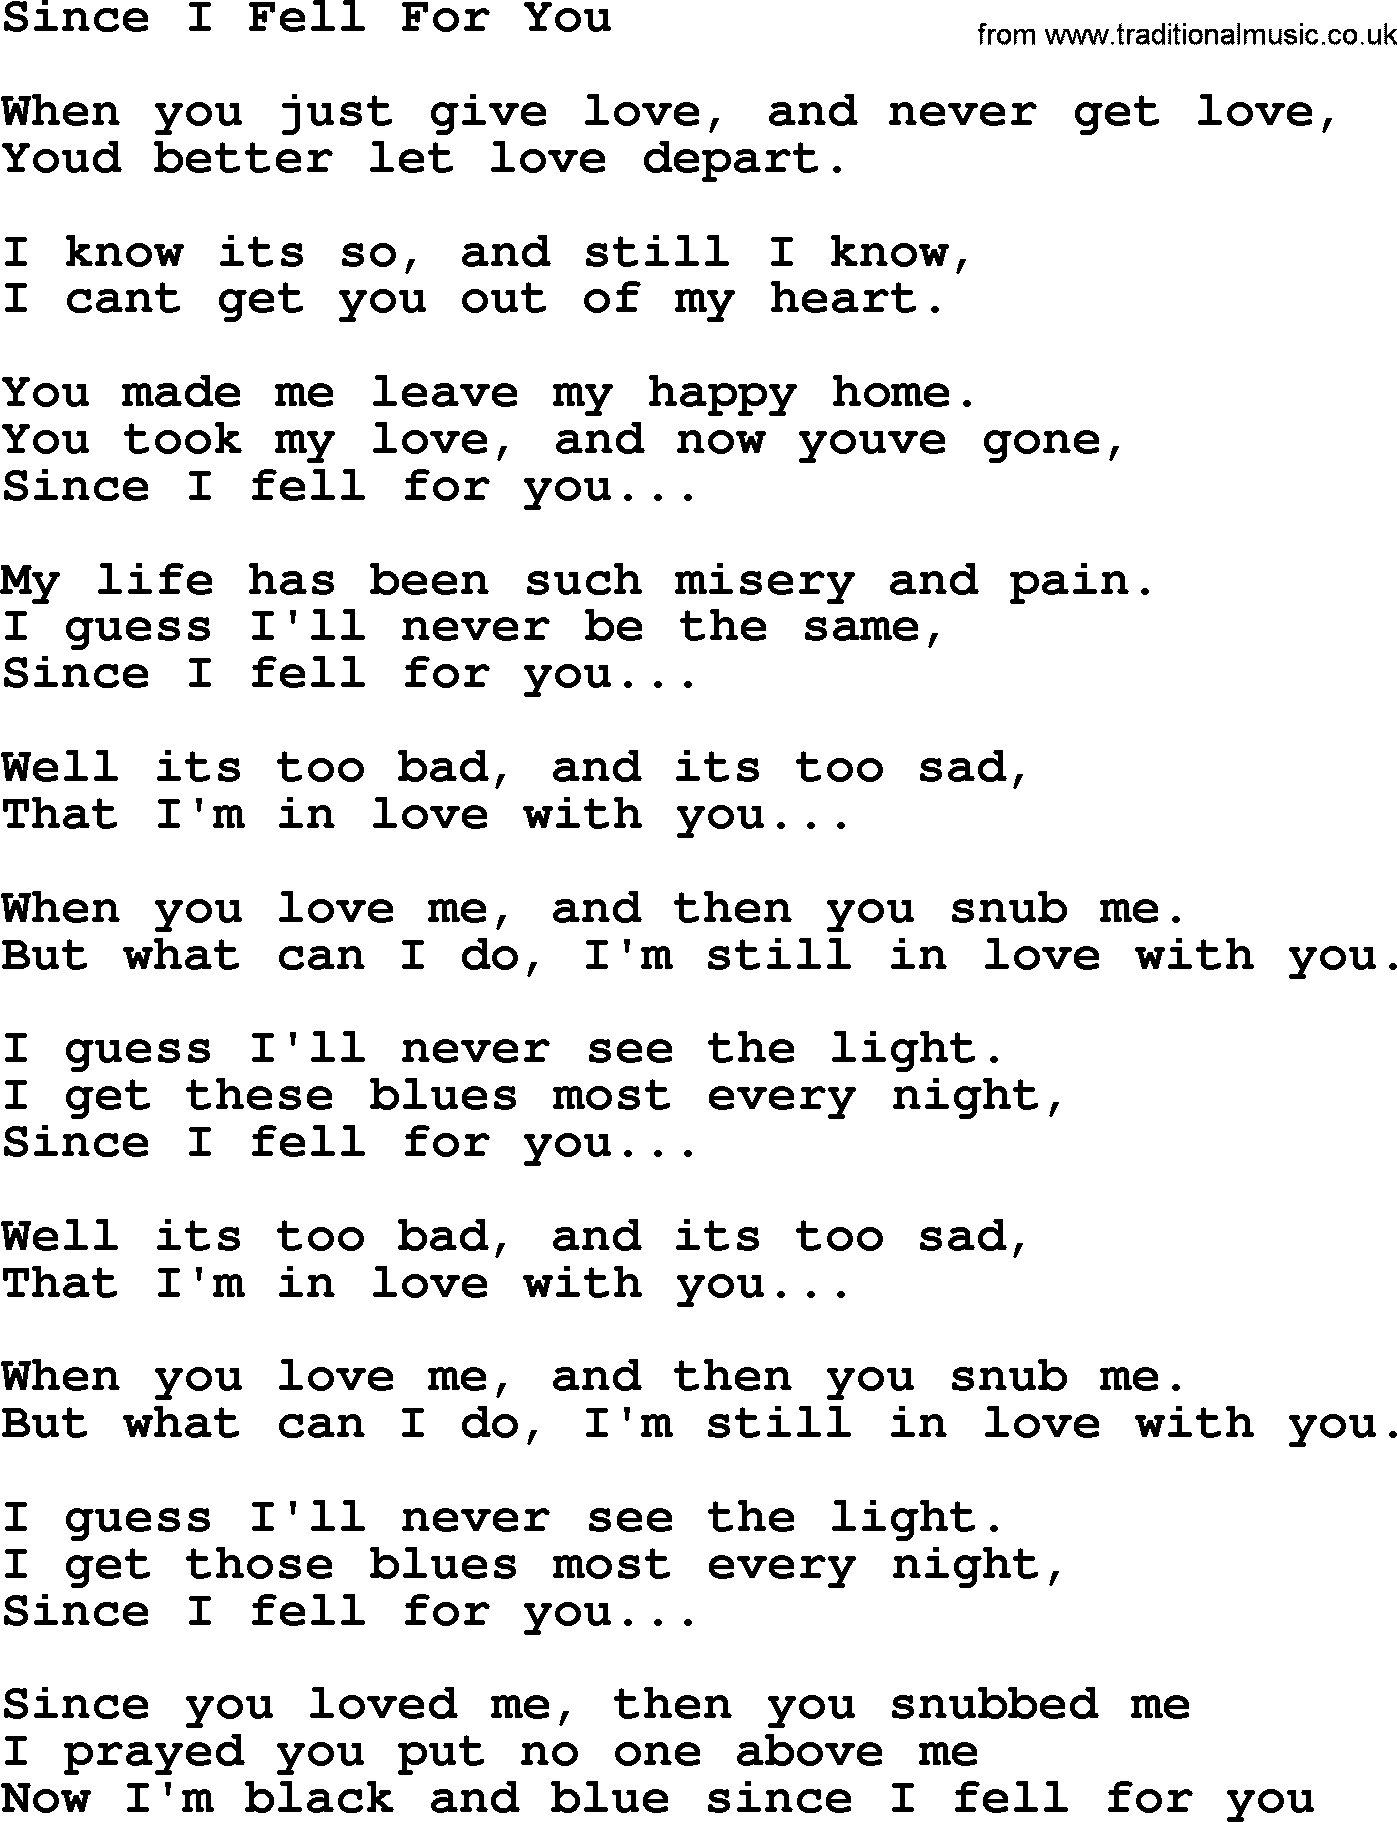 Willie Nelson song: Since I Fell For You lyrics